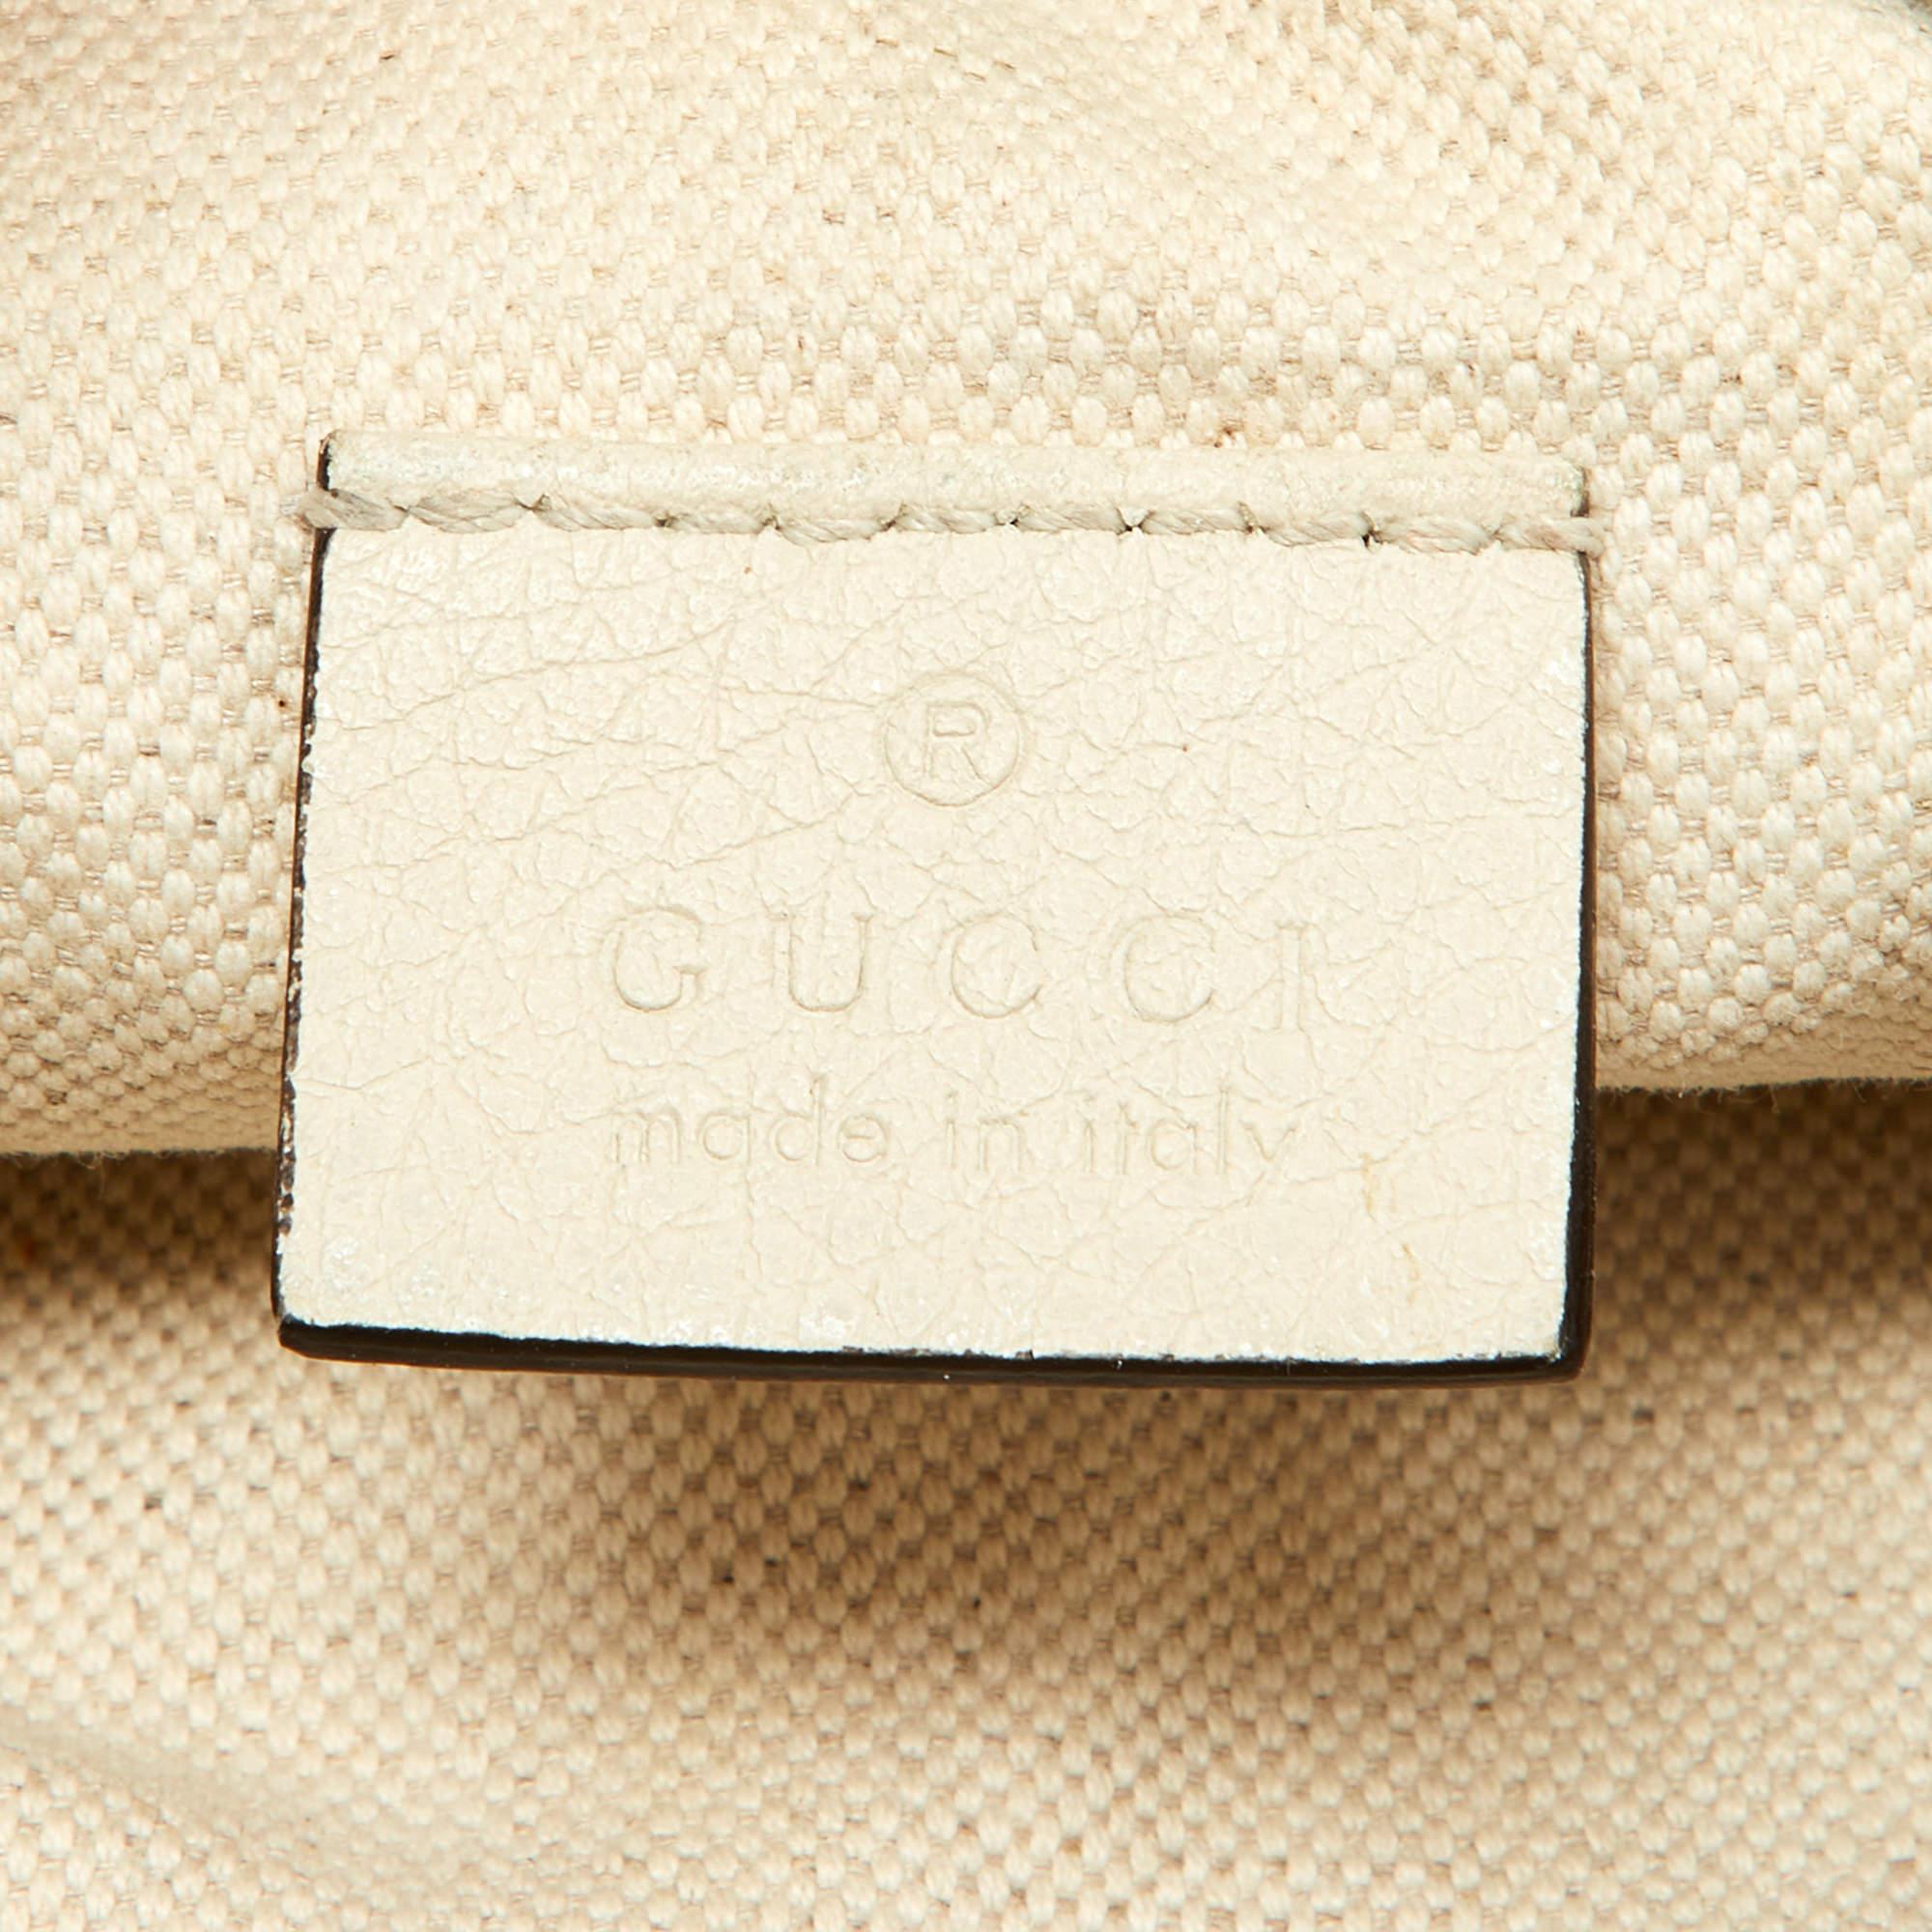 Gucci Cream Leather Logo Web Belt Bag For Sale 6